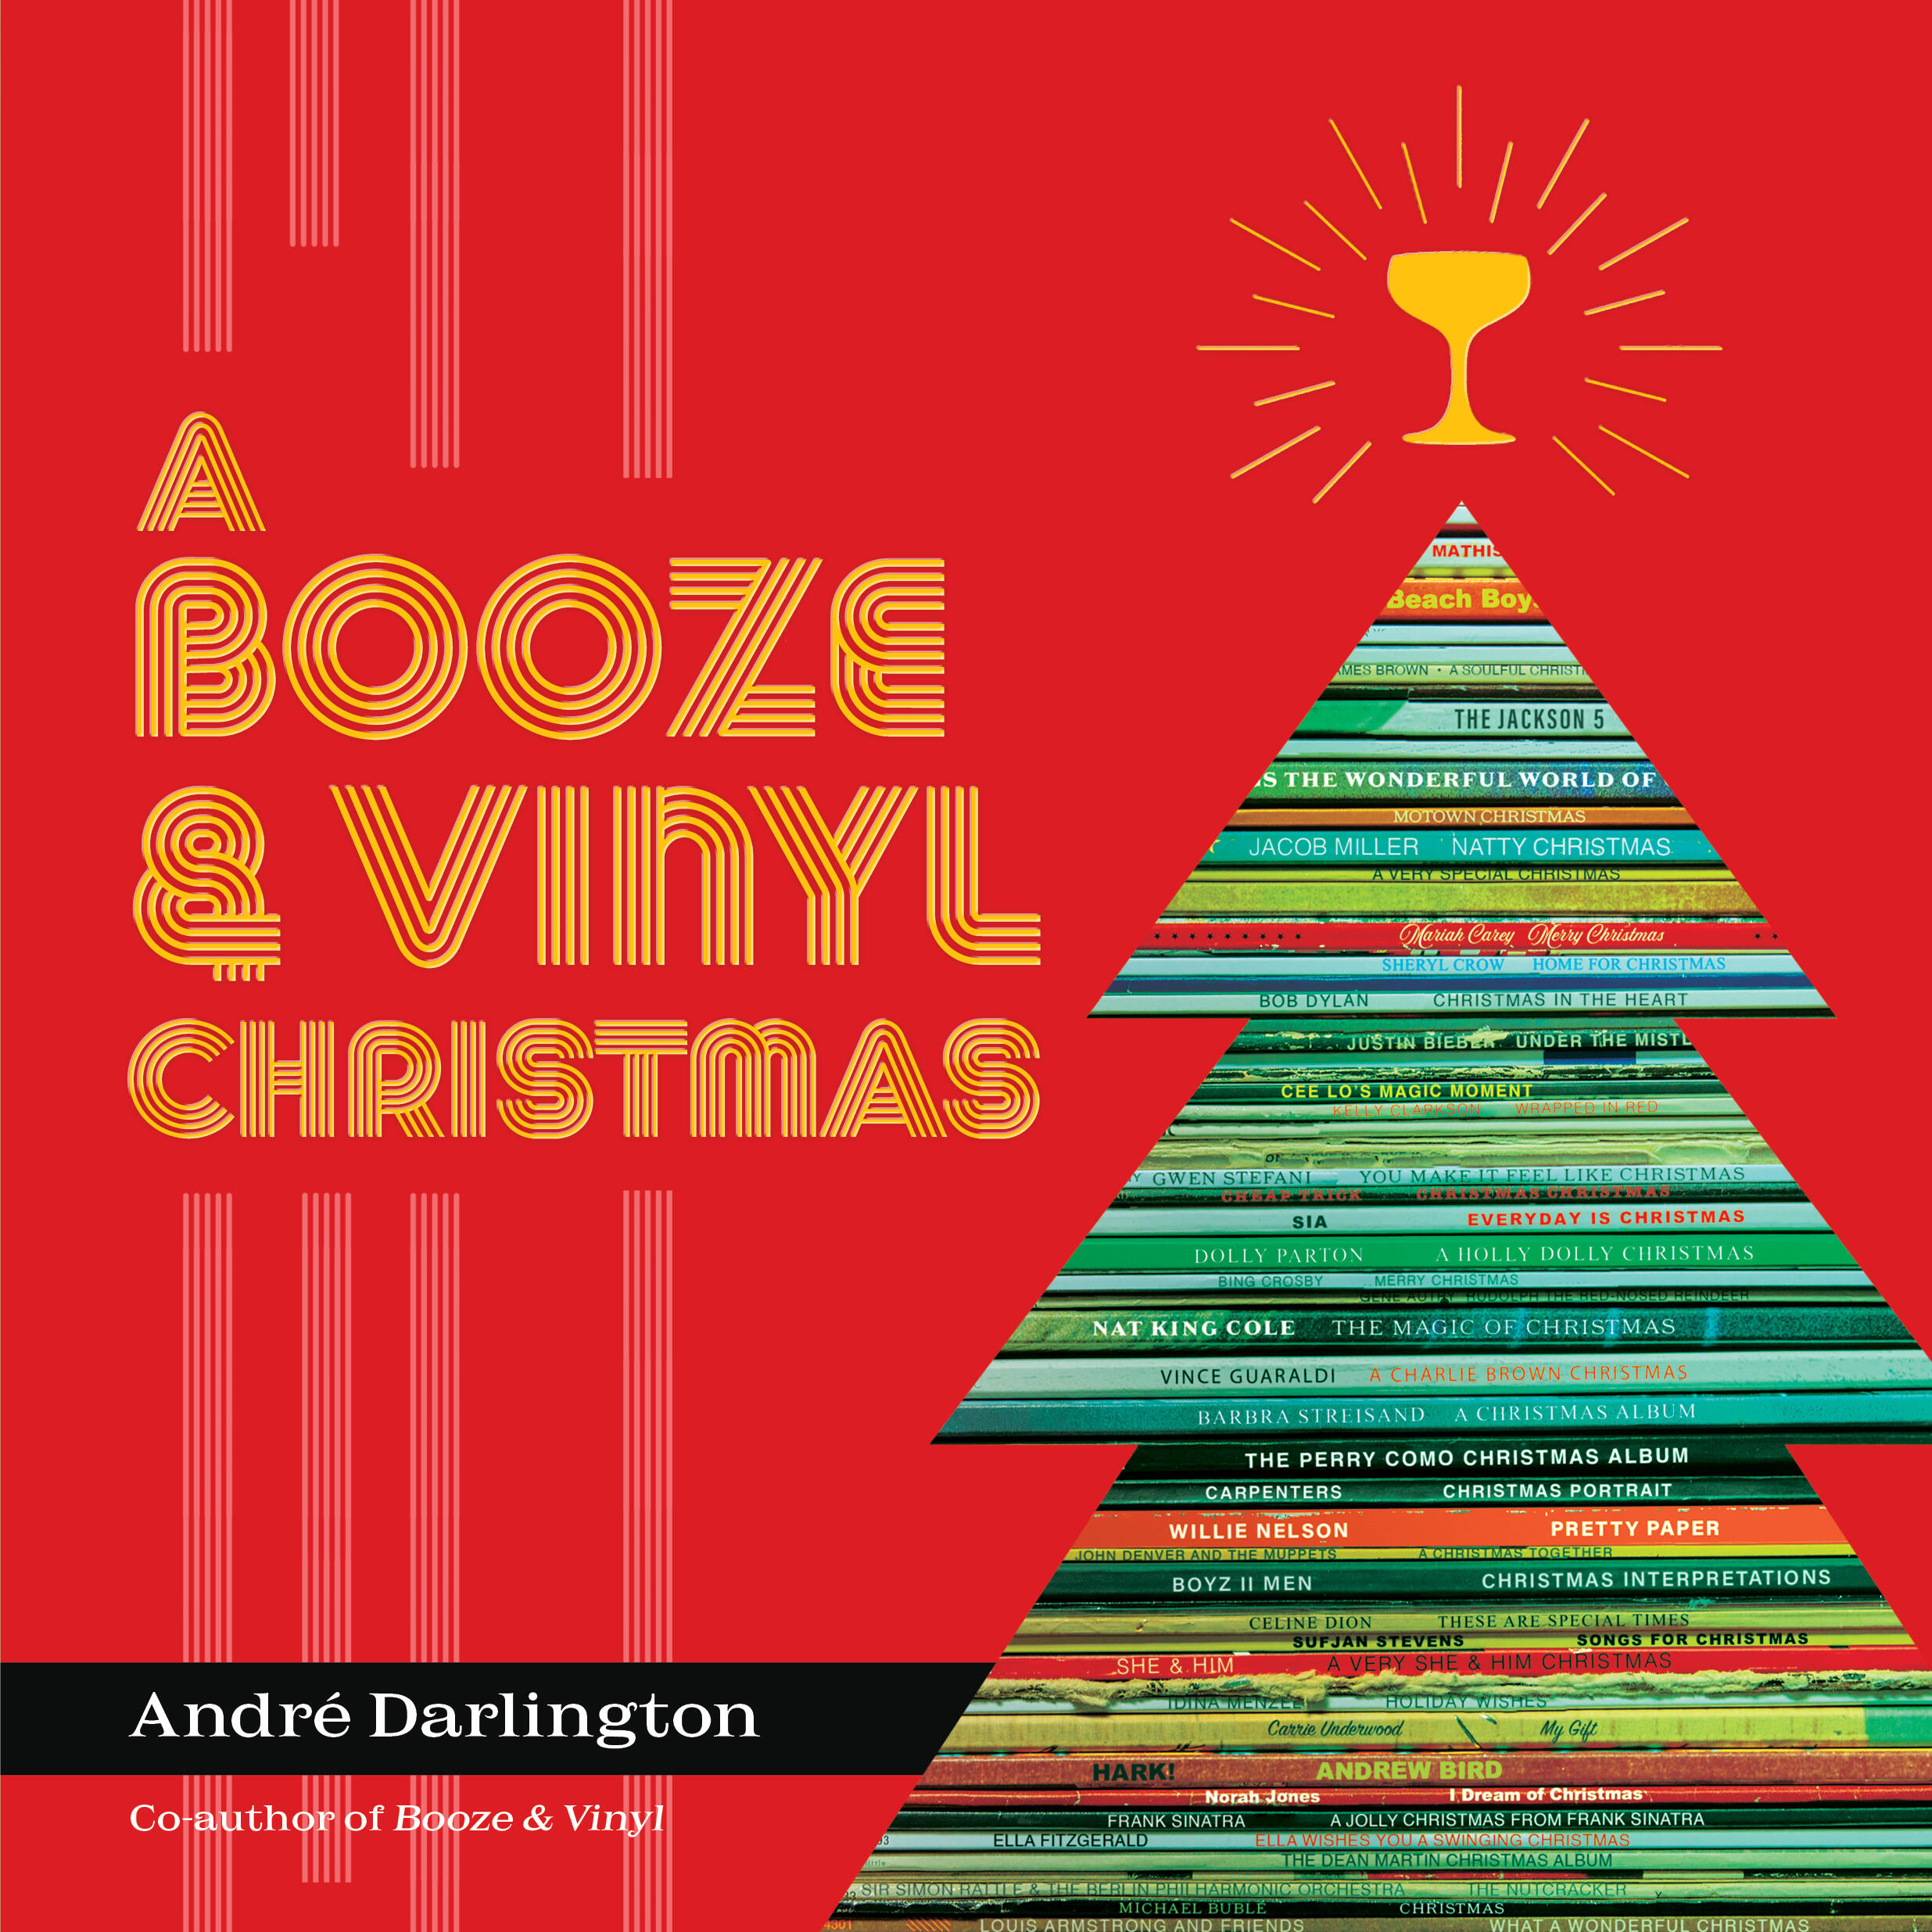 A Booze & Vinyl Christmas by André Darlington